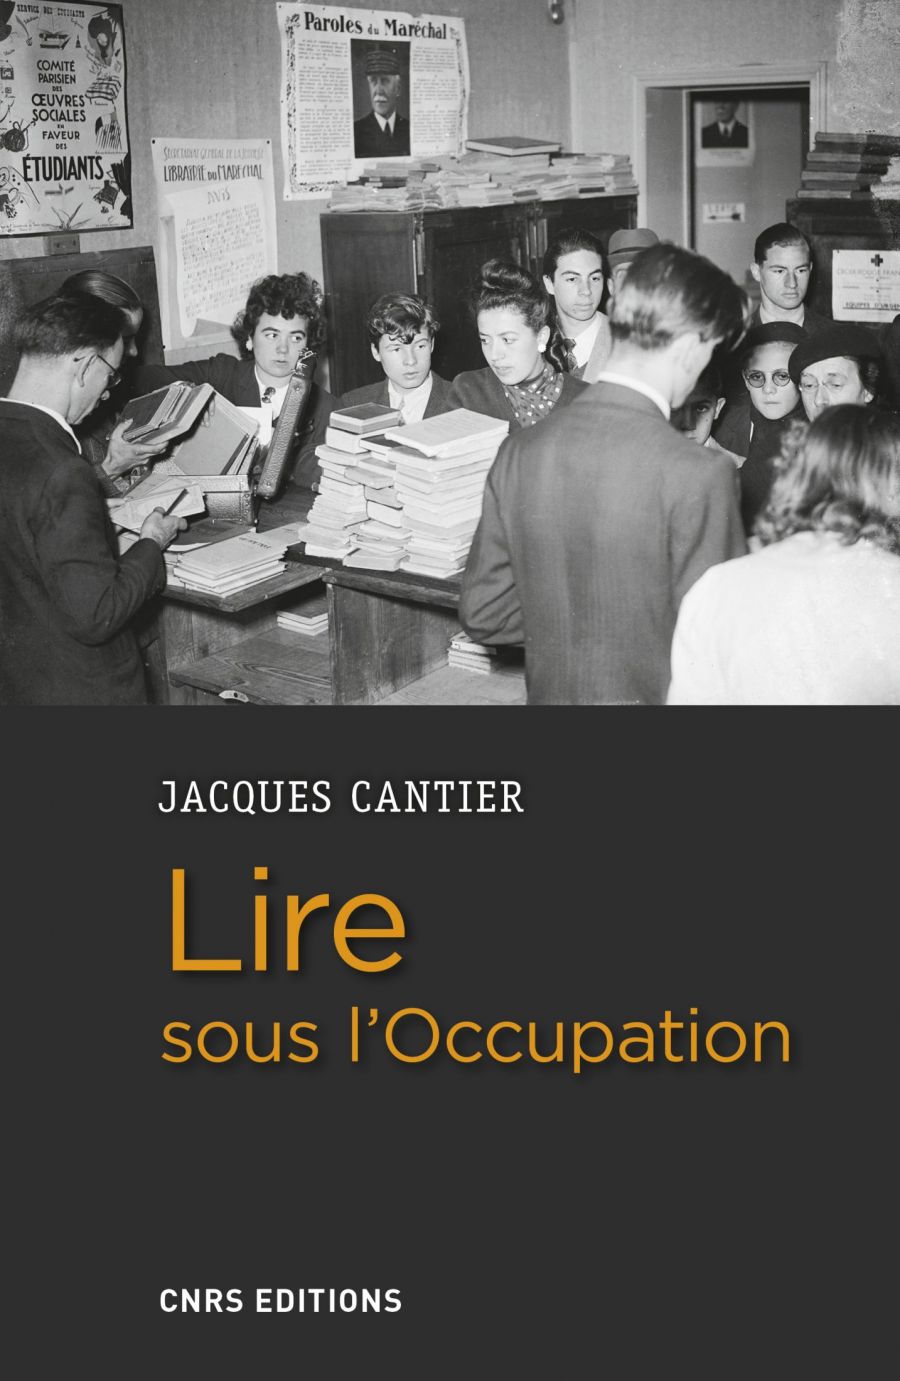 Jacques Cantier